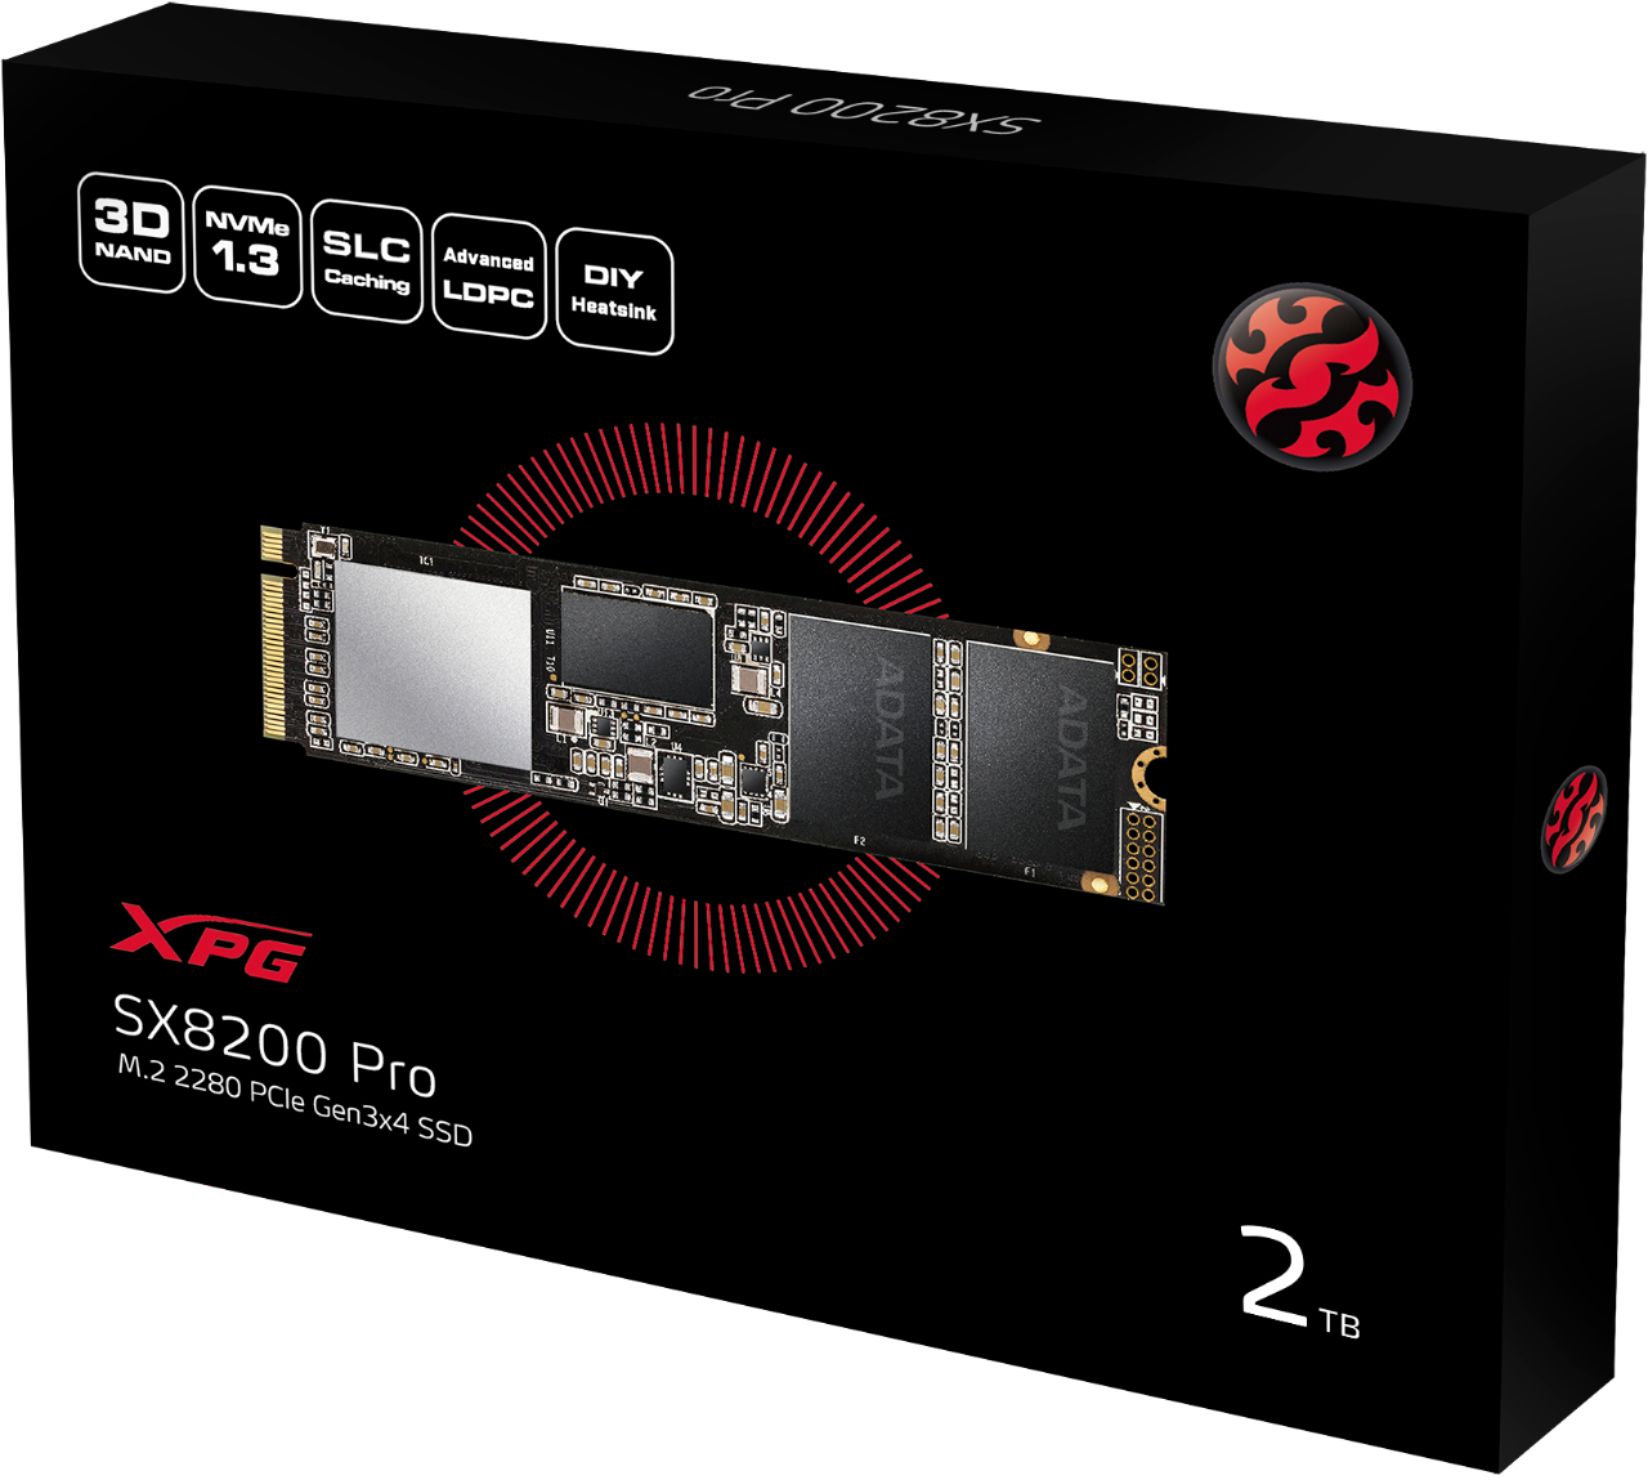 XPG SX8200 Pro M.2 2280 512GB PCIe NVMe Gen3x4 Internal Solid State Drive SSD 